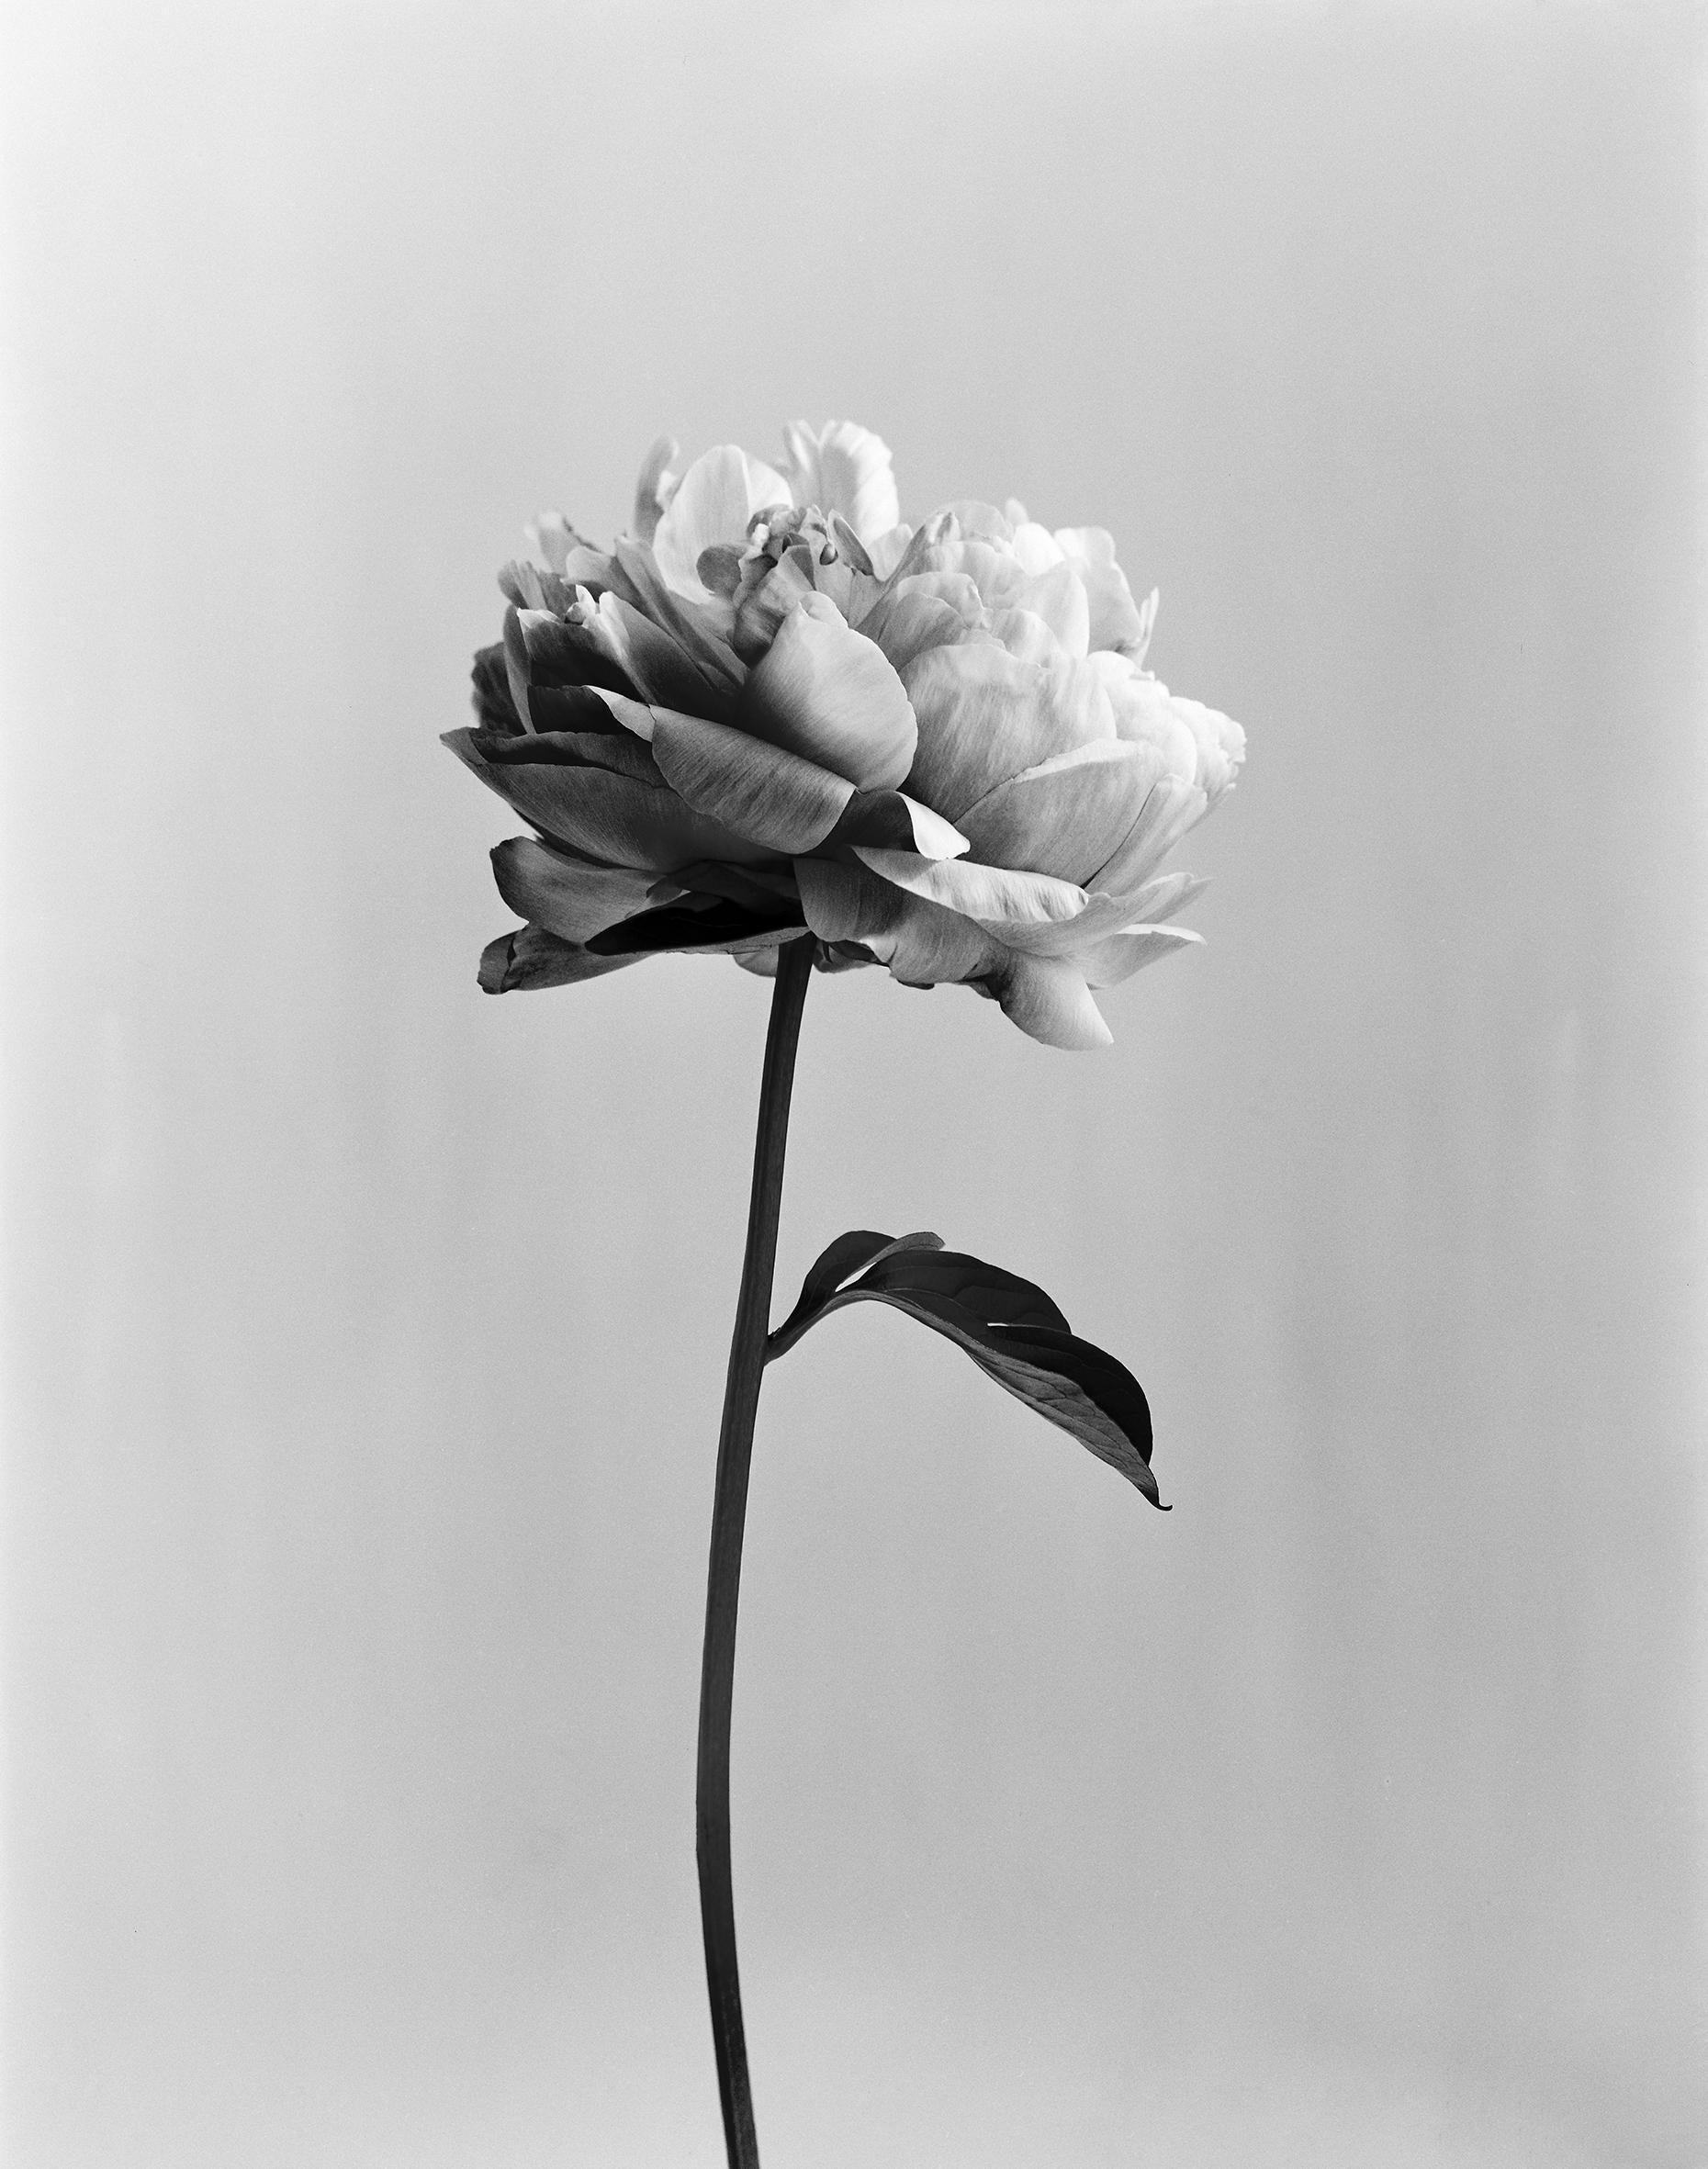 Ugne Pouwell Black and White Photograph - Peony no.3 - analogue black and white floral photography